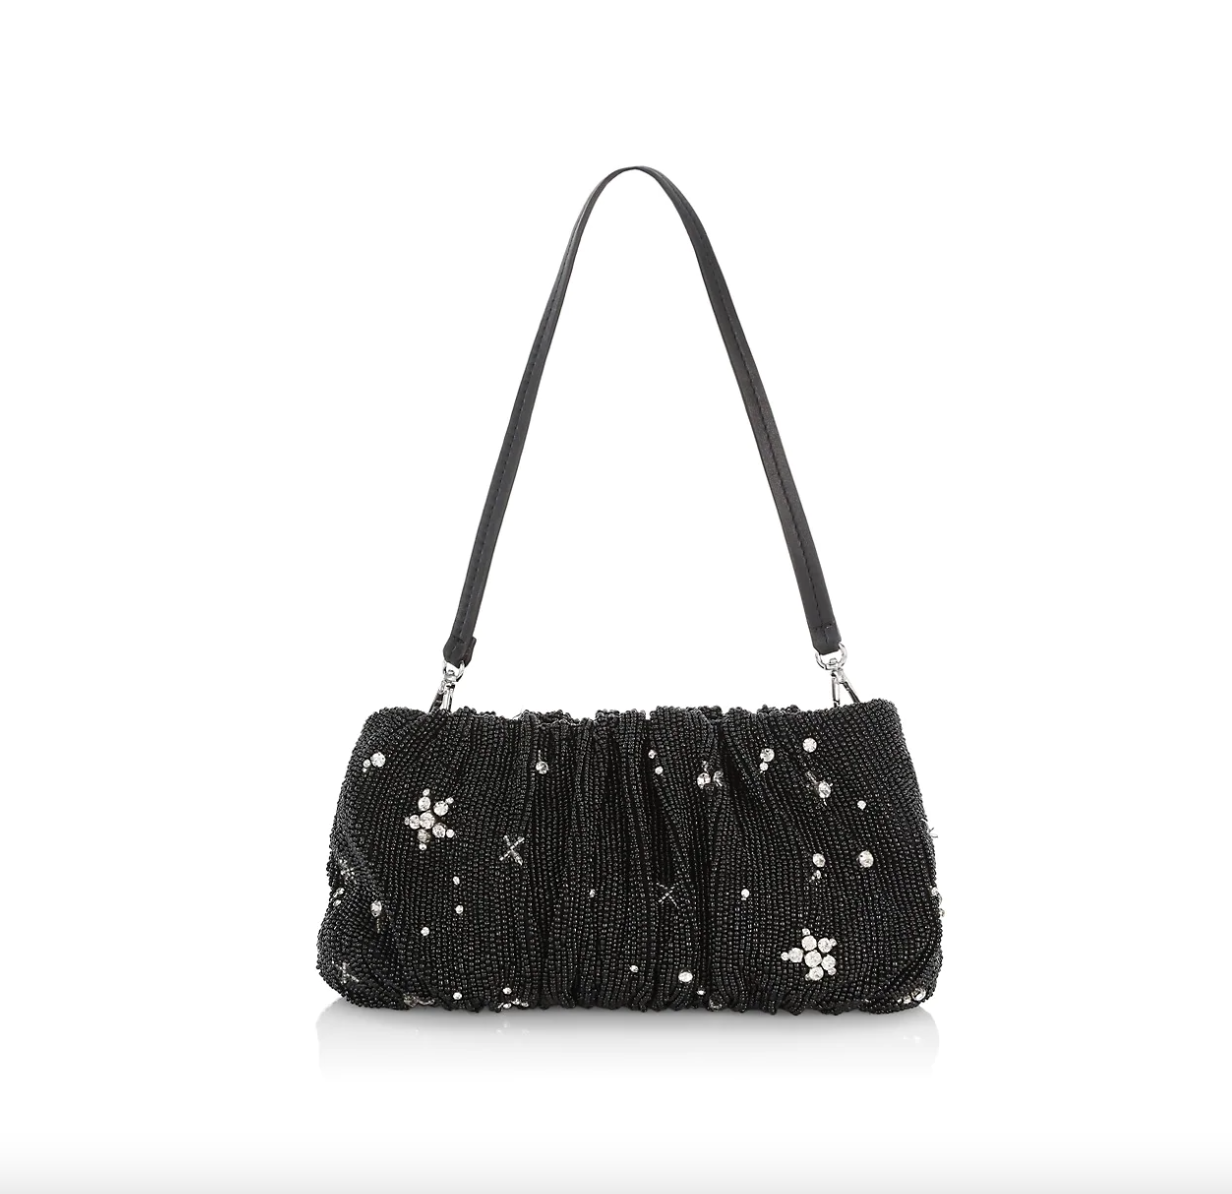 Beaded shoulder bag with starry crystal embelishments